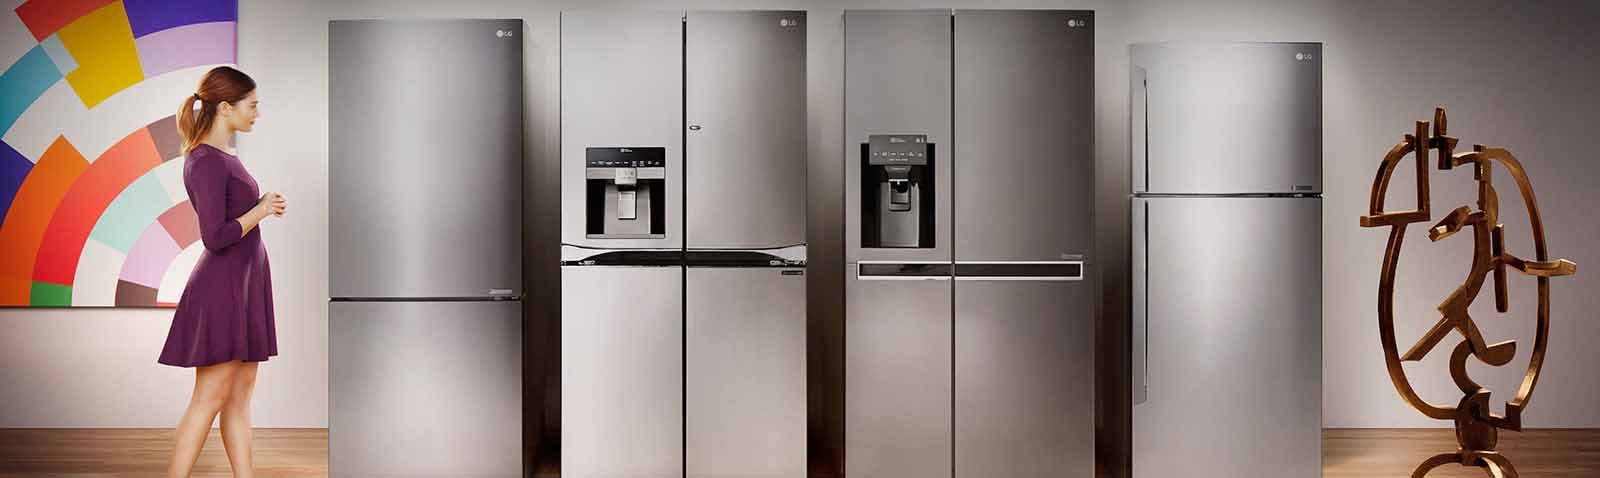 Refrigerador Sorocaba